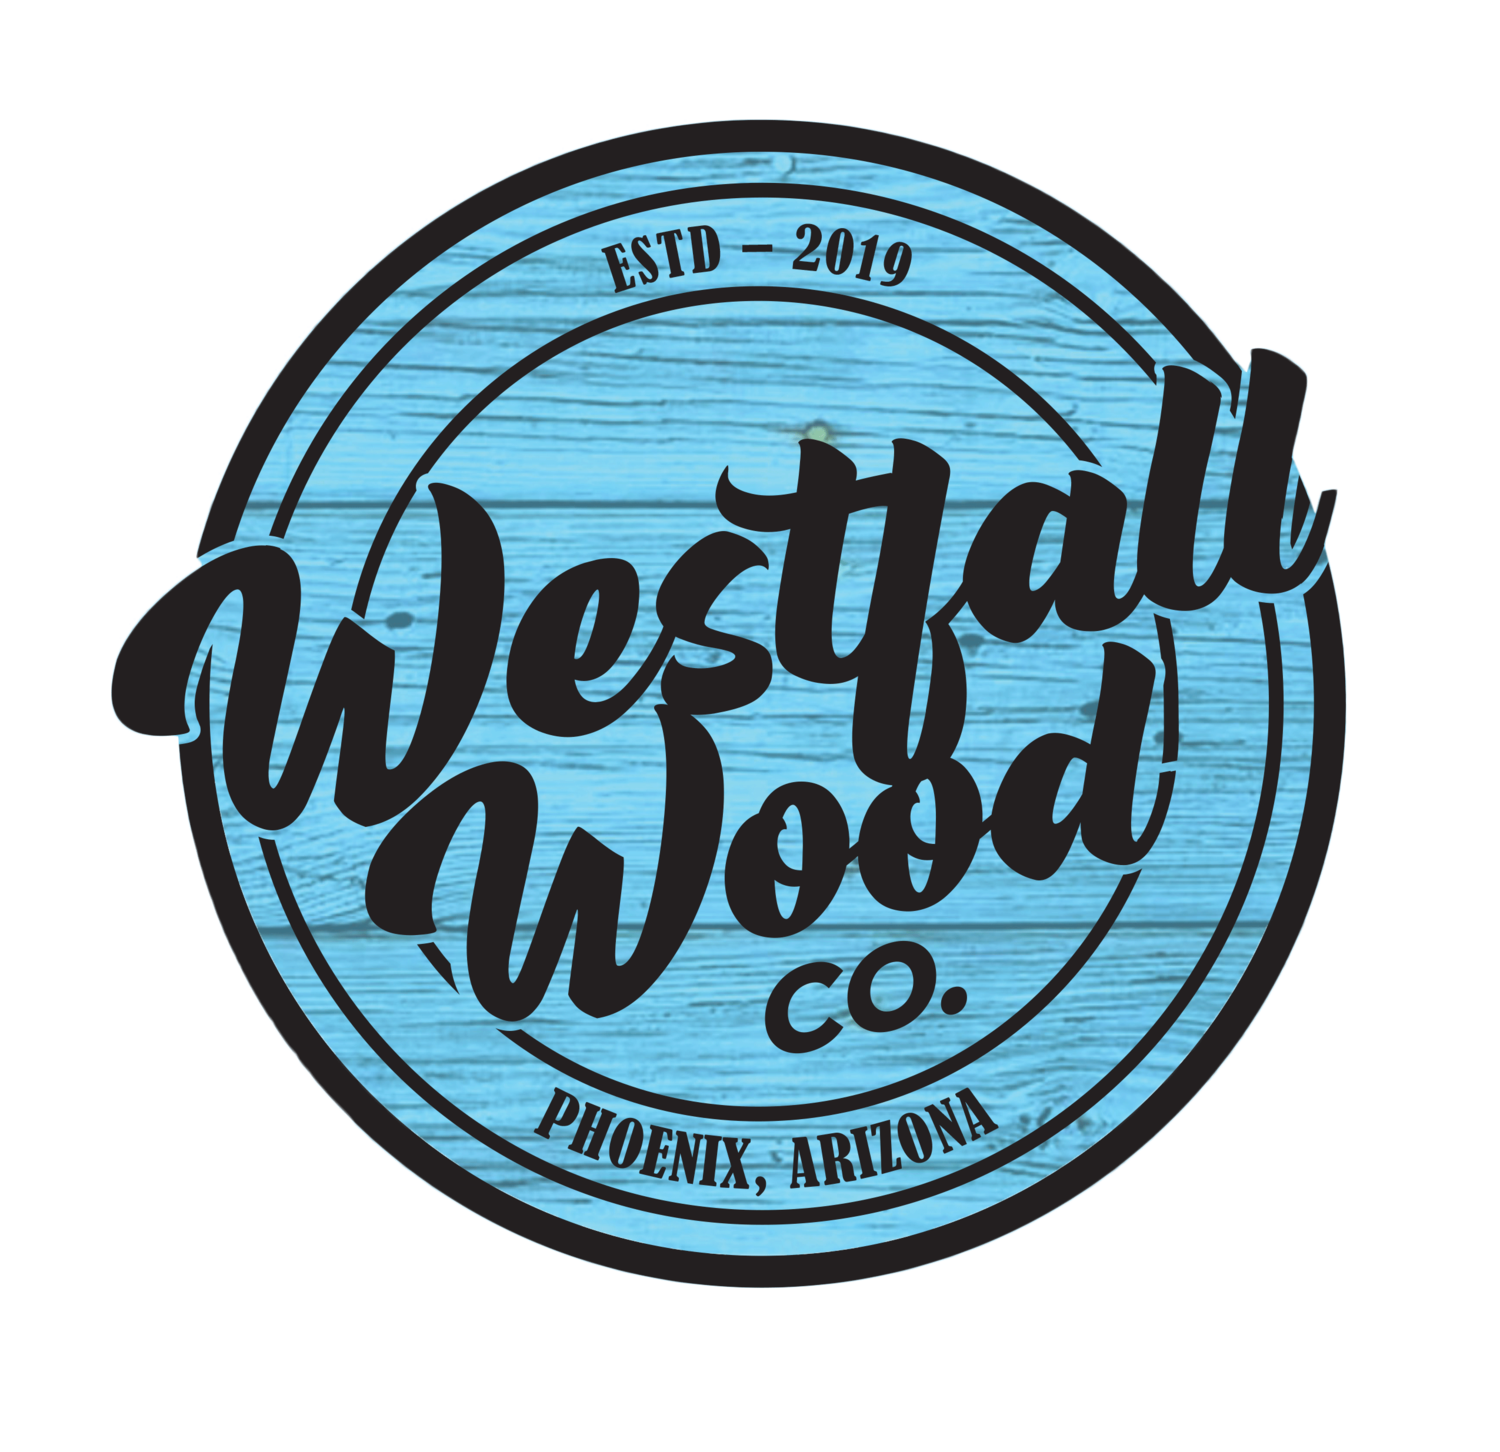 Westfall Wood Co.